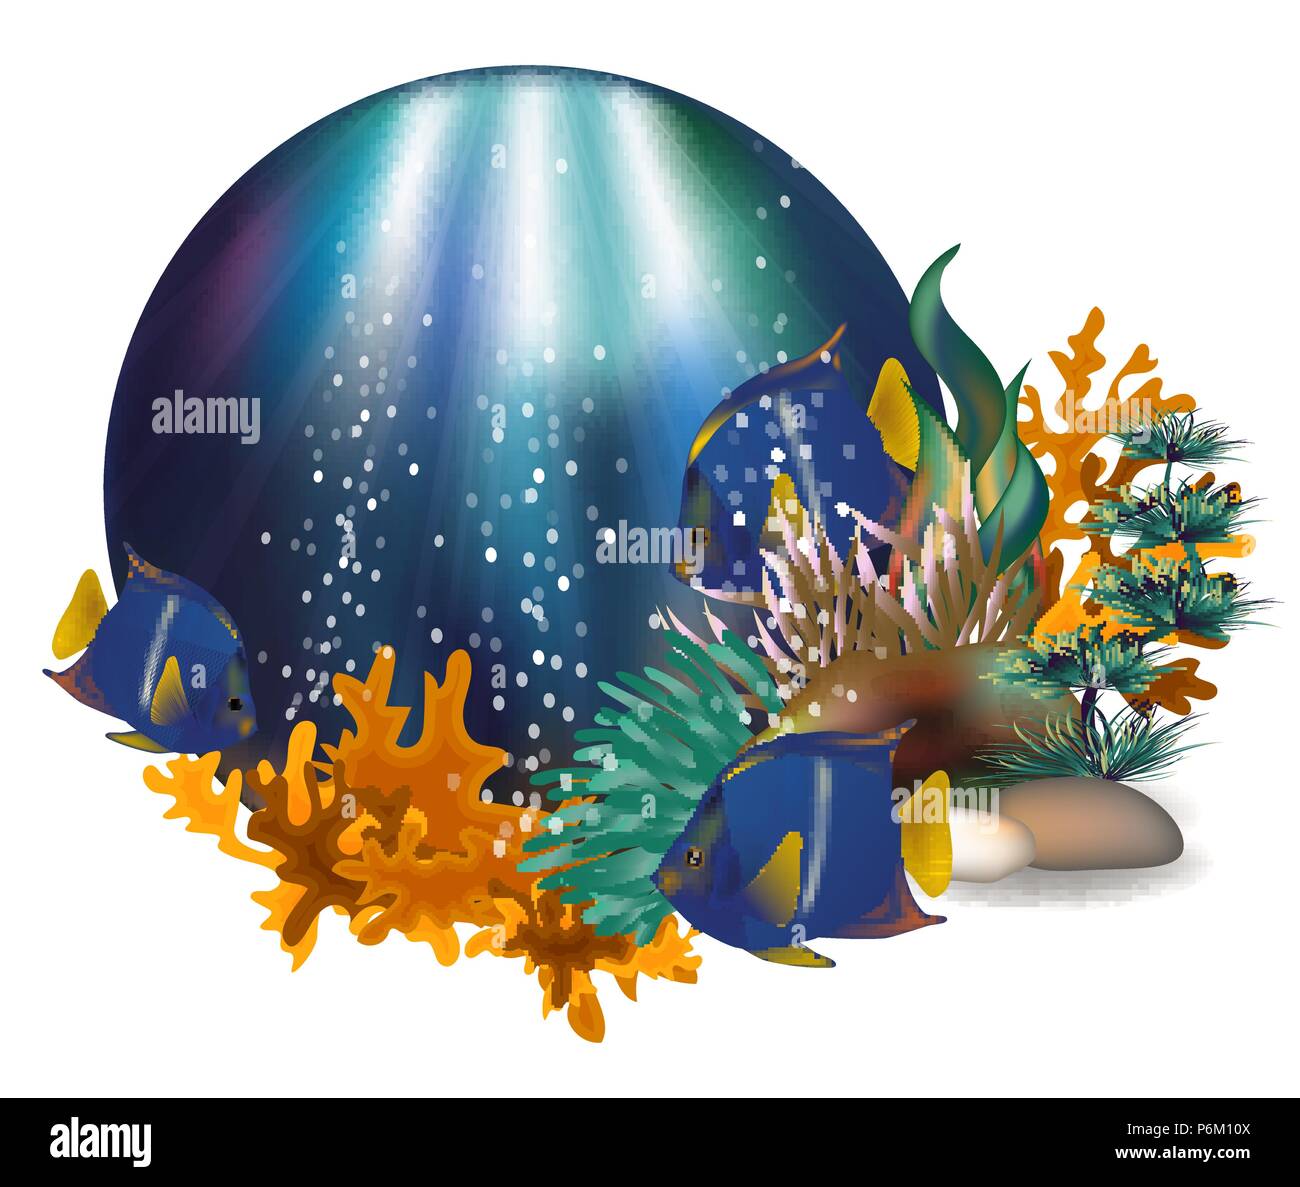 Underwater card with fish Zebrasoma xanthurum, vector illustration Stock Vector